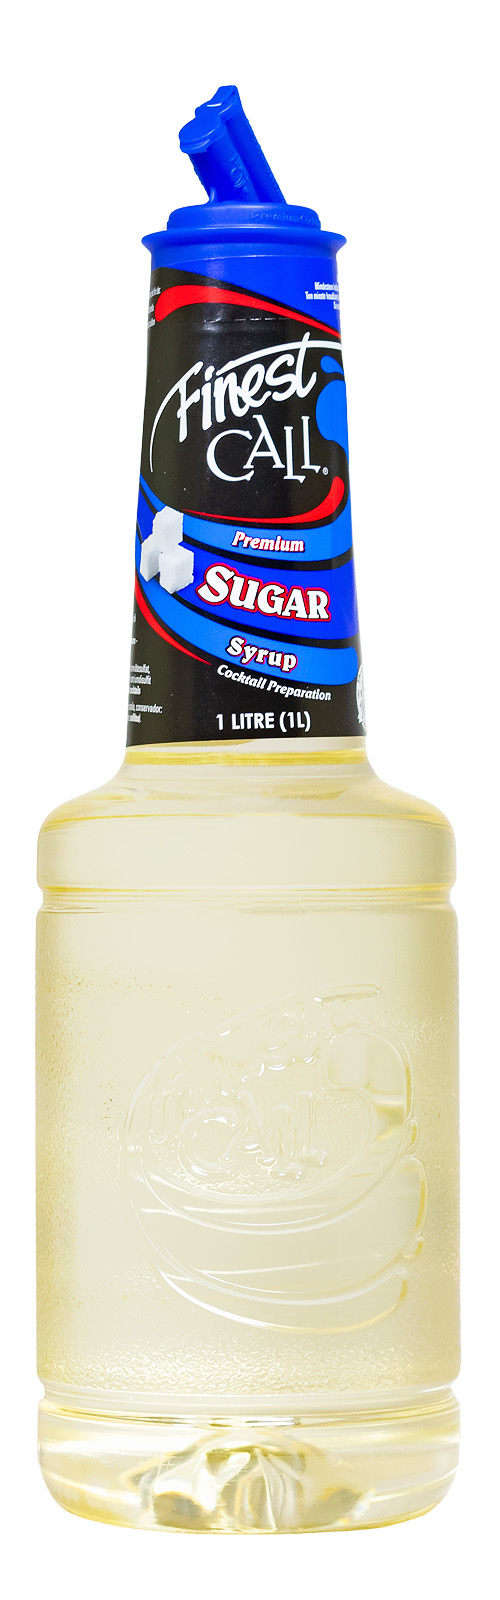 Finest Call Sugar Sirup - 1 Liter